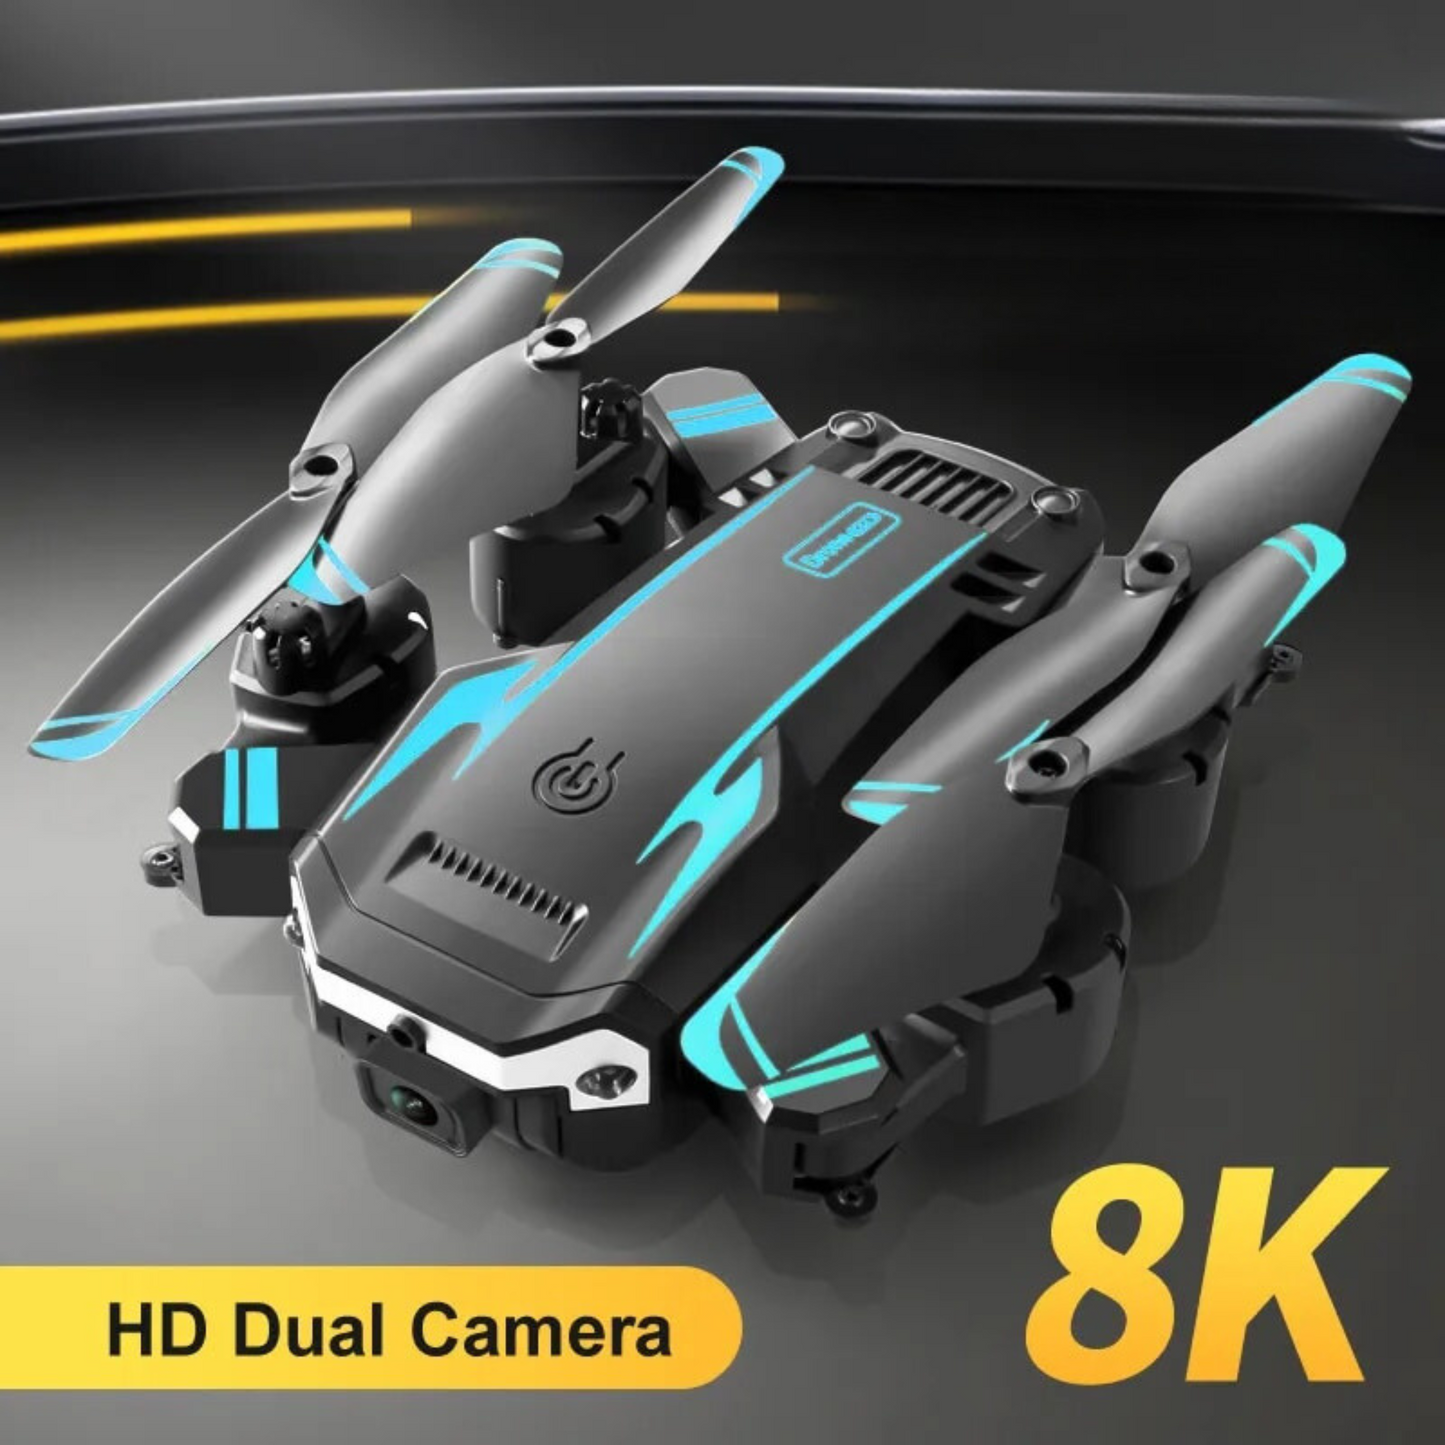 KOHR G6 Professional Drone 8K HD Camera